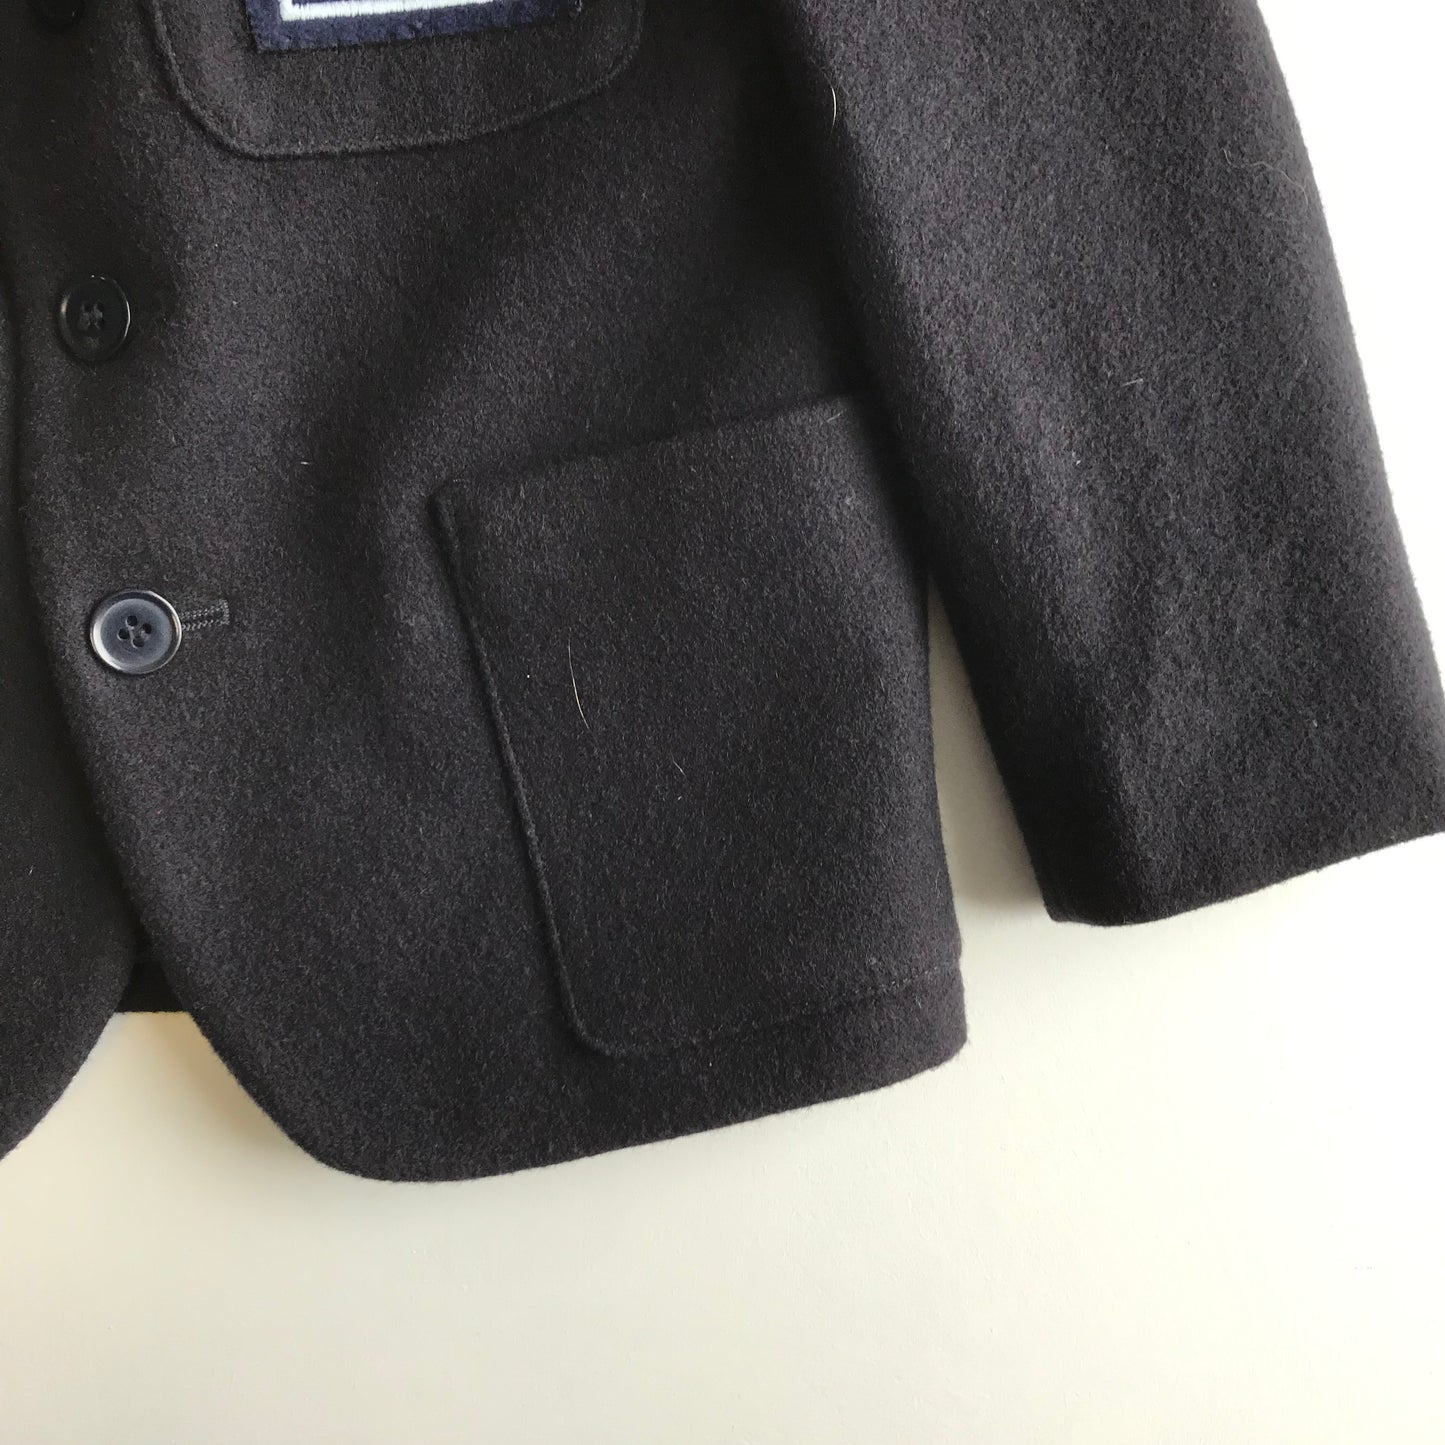 West Coats Primary Blazer - Size 2 - 61cm/24in